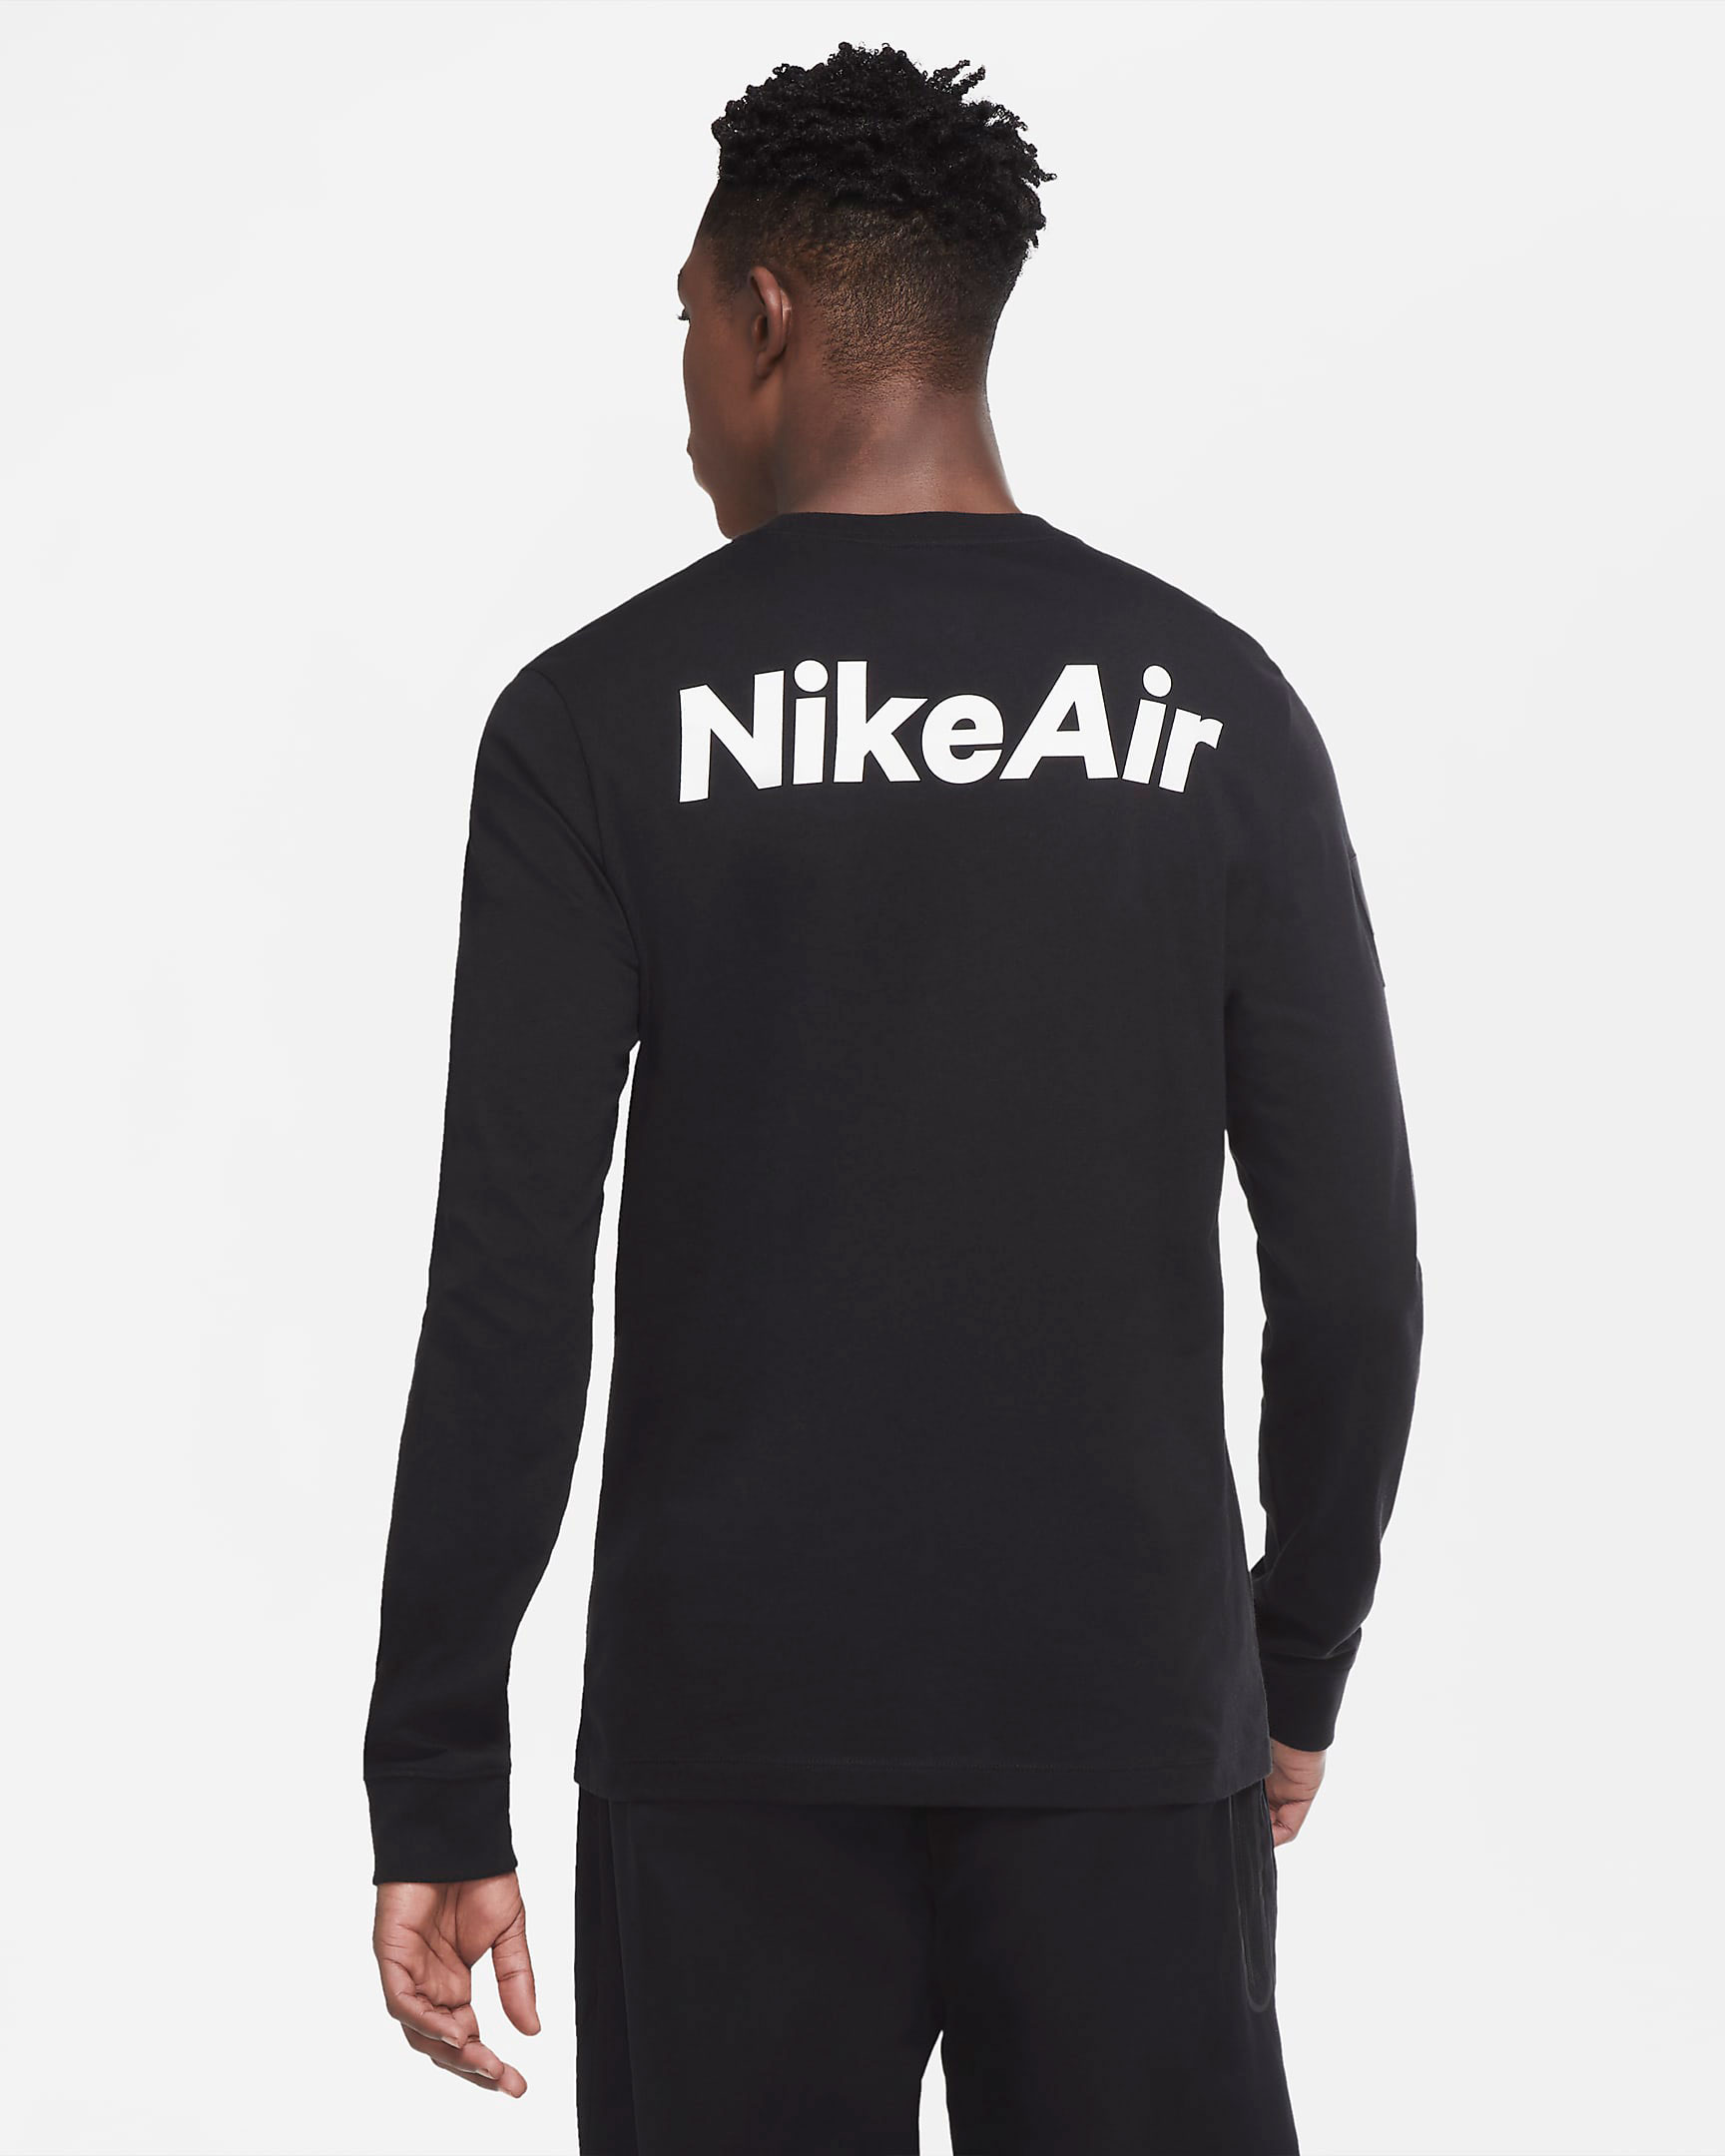 nike-air-vapormax-flyknit-2020-oreo-shirt-7